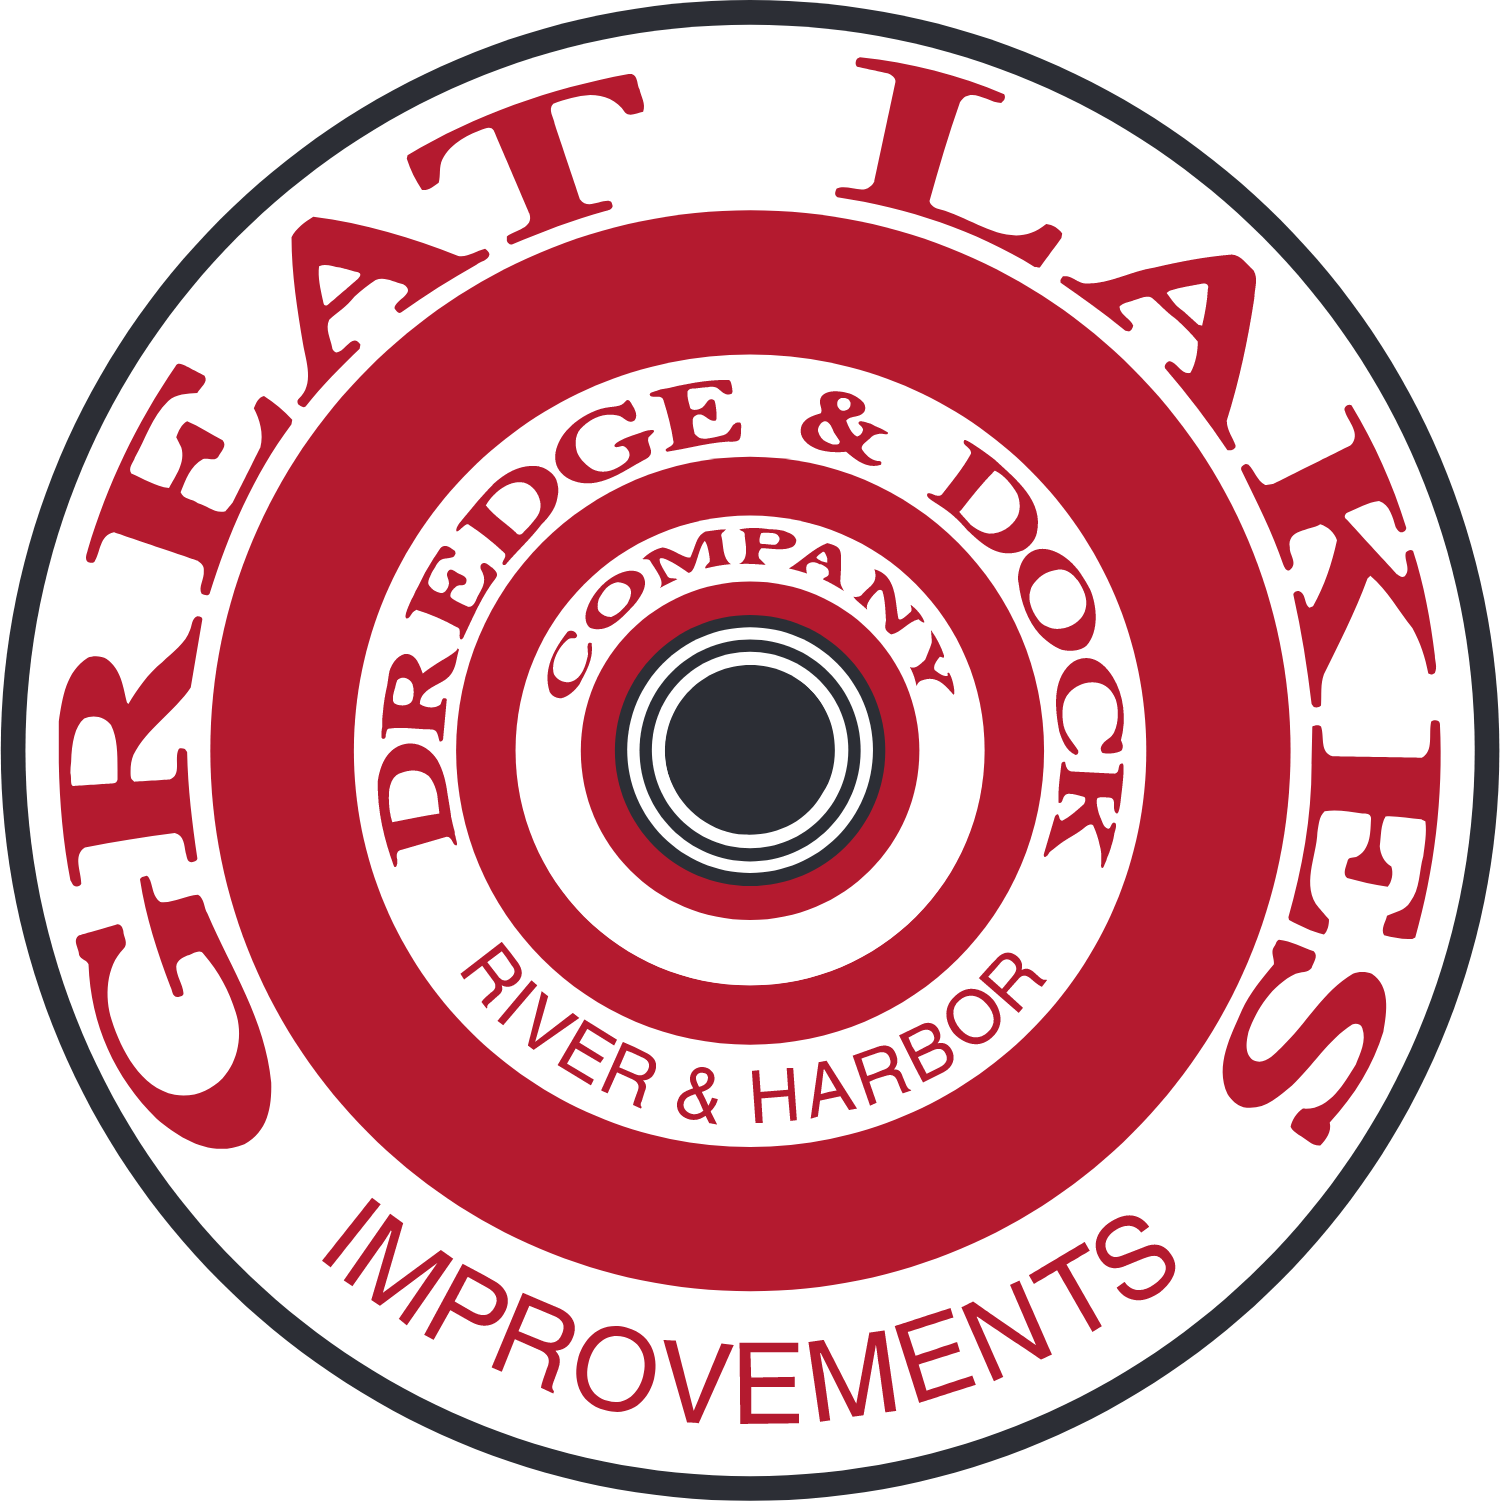 Great Lakes Dredge & Dock Corp. logo (PNG transparent)